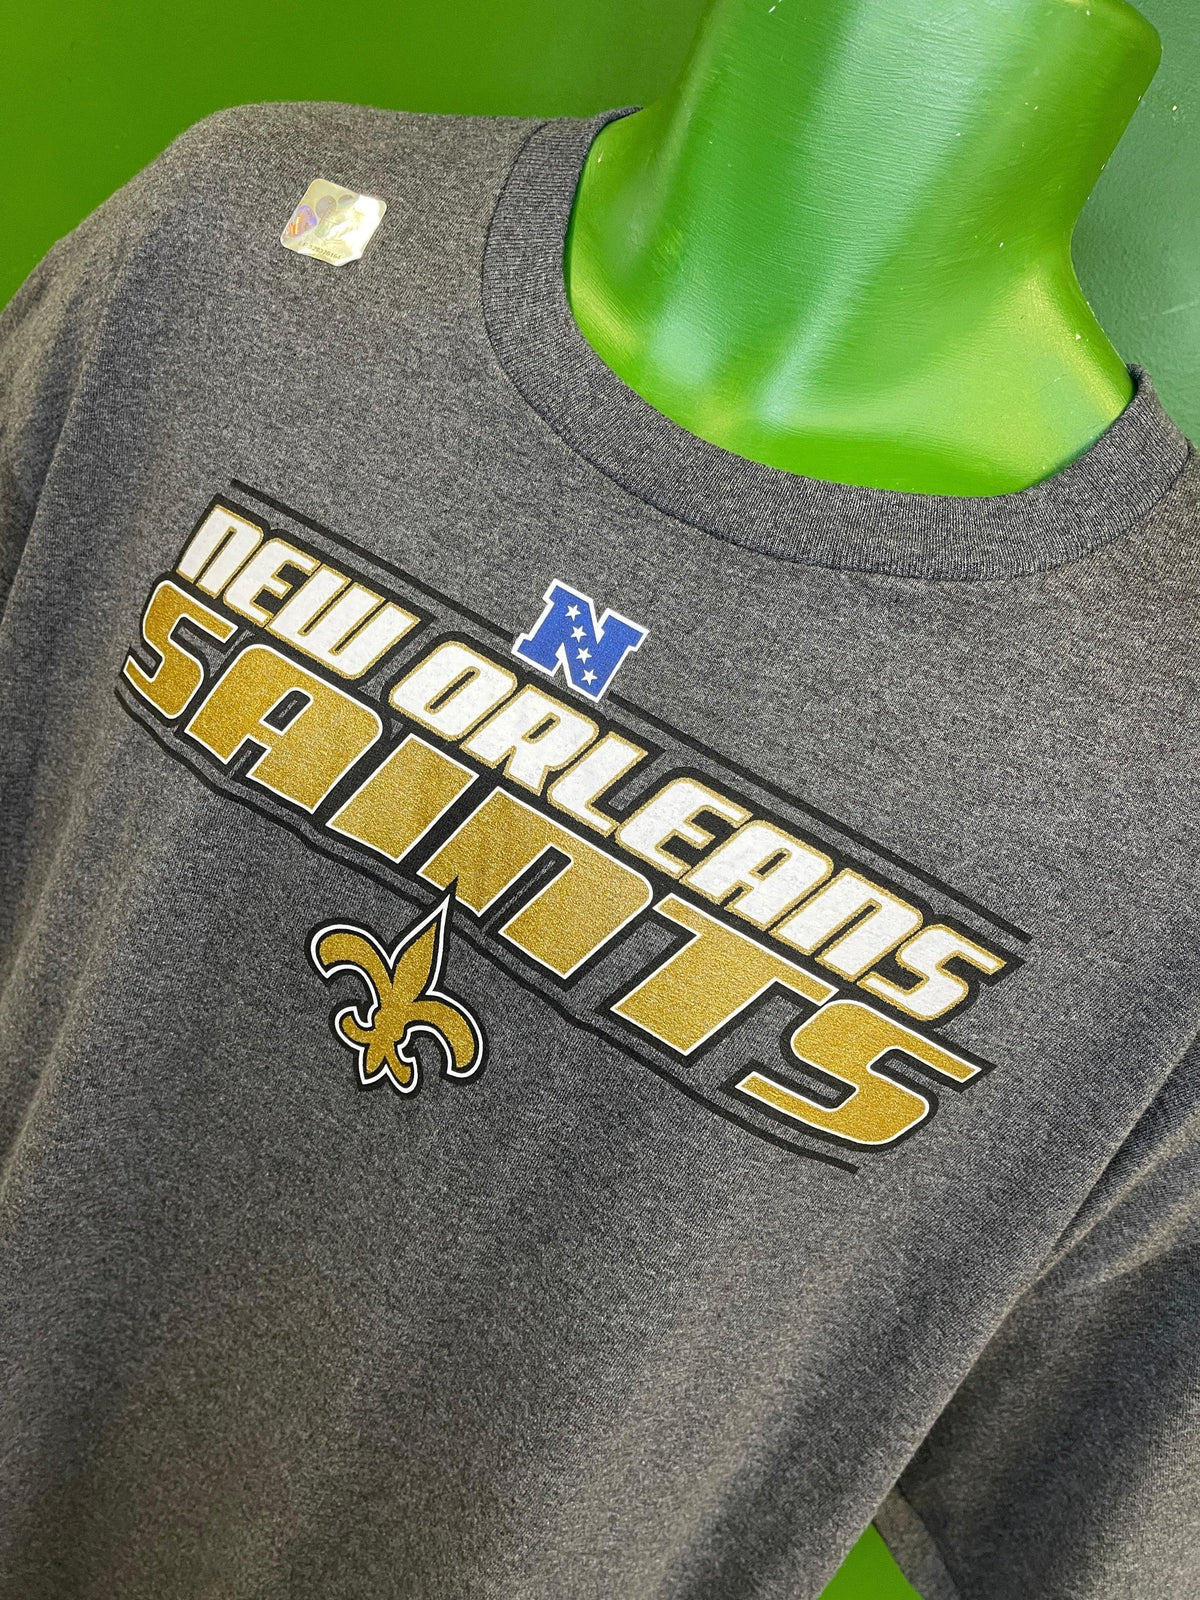 NFL New Orleans Saints Grey Metallic T-Shirt Men's X-Large NWT